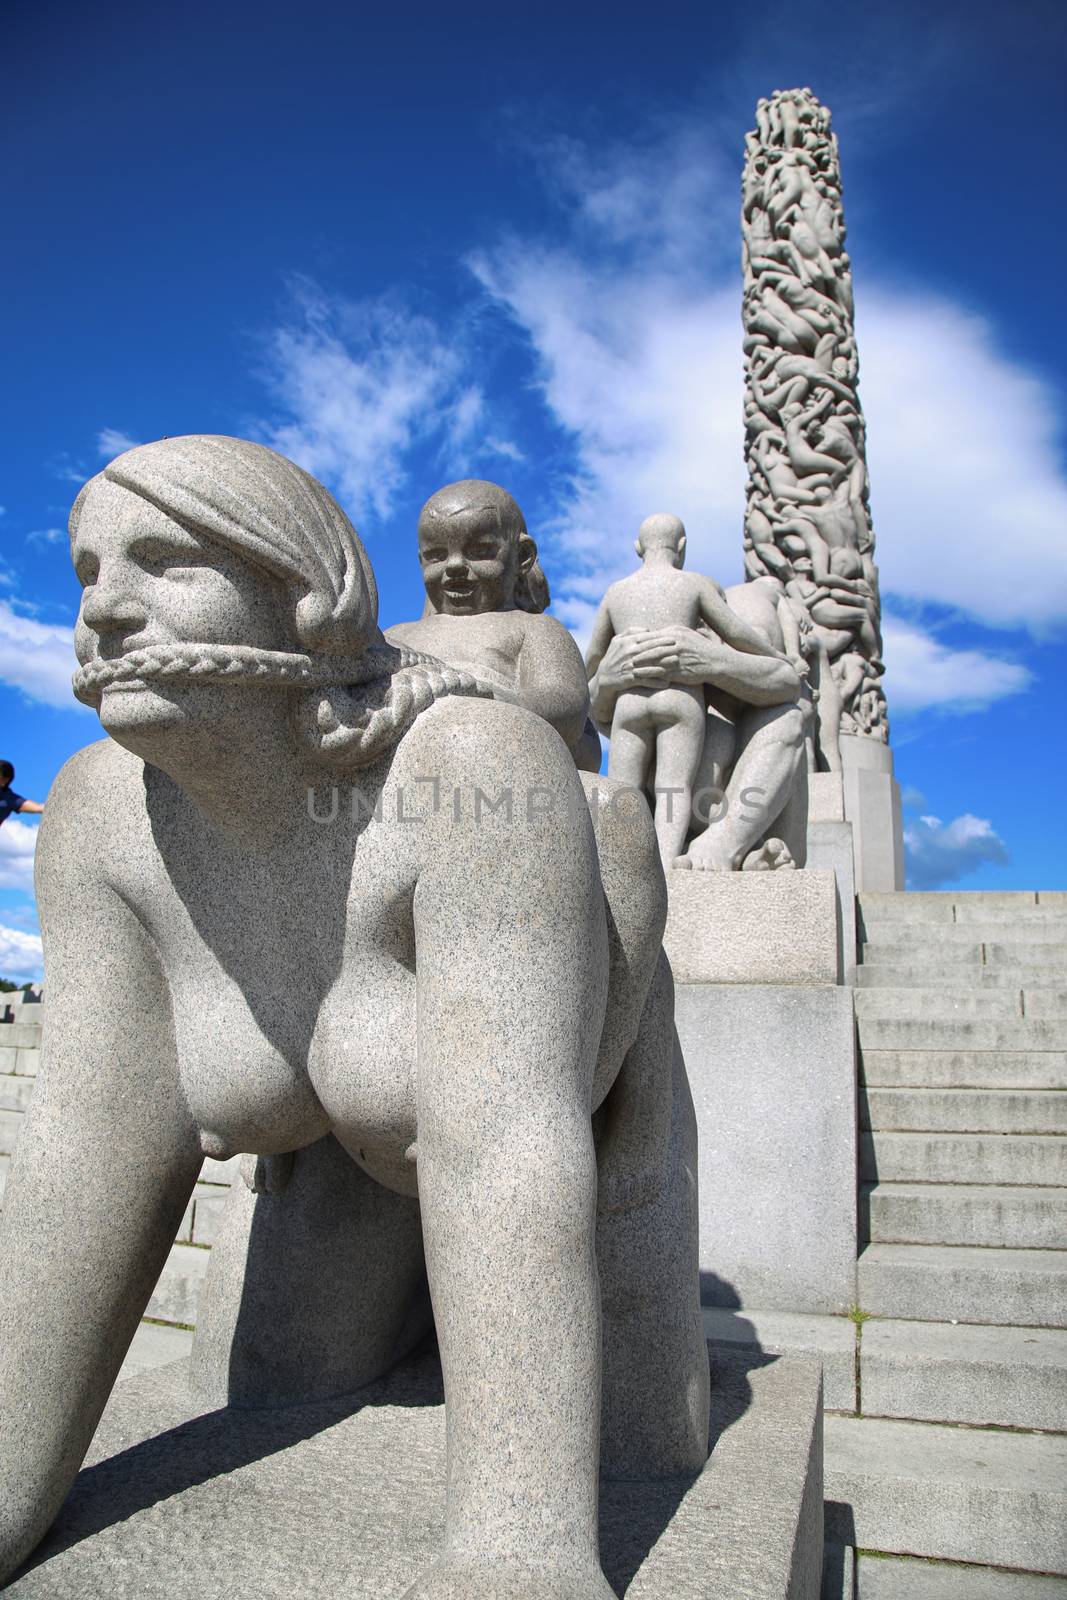 EDITORIAL OSLO, NORWAY - AUGUST 18, 2016: Sculptures at Vigeland Park in the popular Vigeland park ( Frogner Park ), designed by Gustav Vigeland in Oslo, Norway on August 18, 2016. 